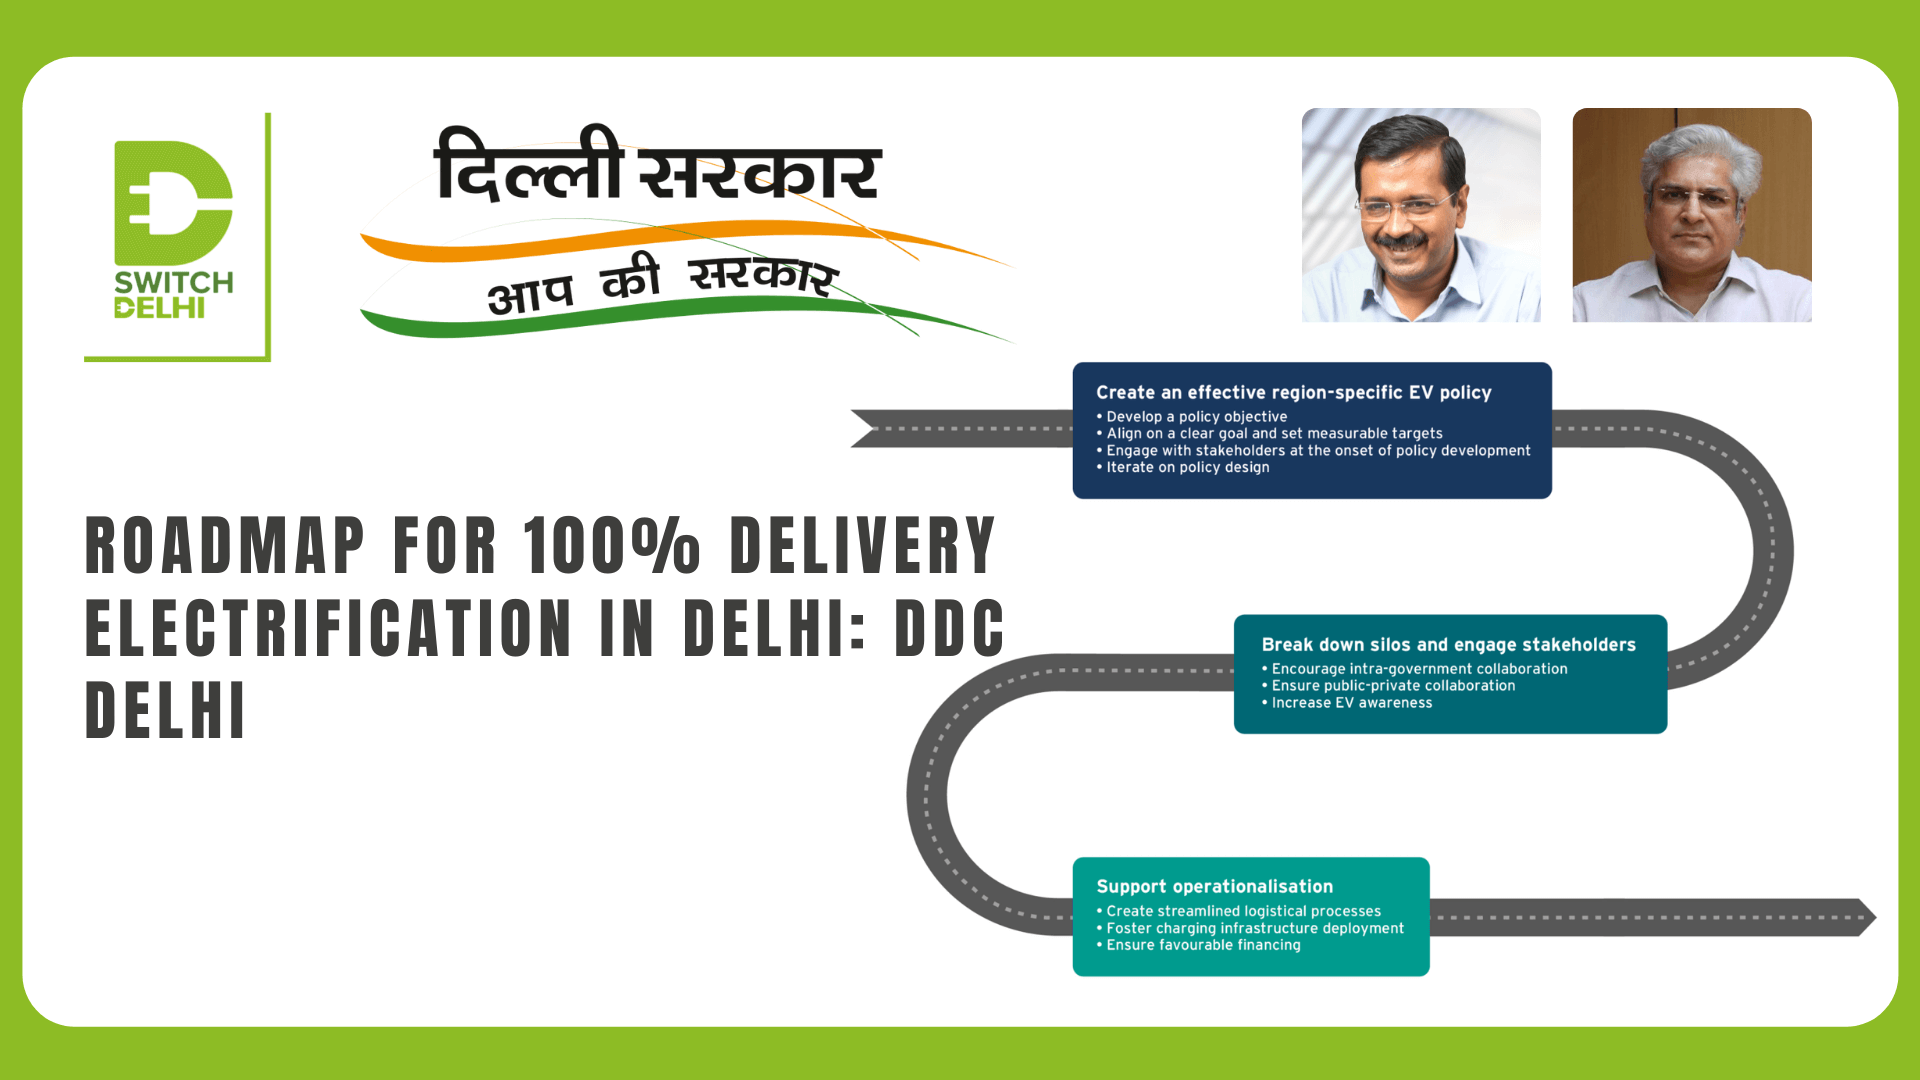 https://e-vehicleinfo.com/roadmap-for-100-delivery-electrification-in-delhi/